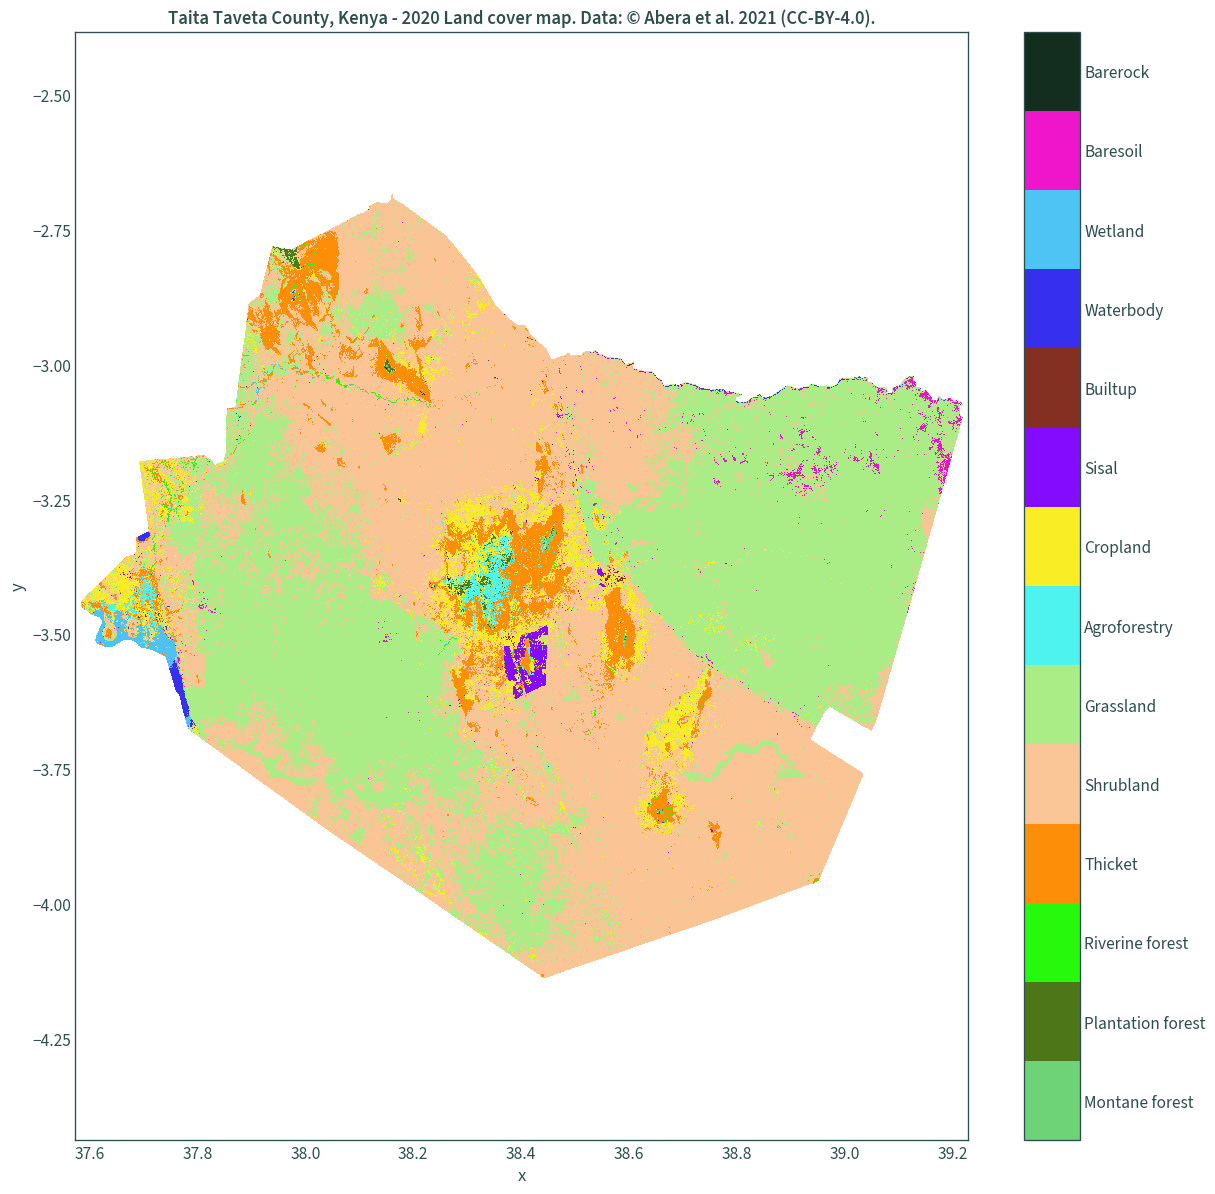 The land cover plot of Taita Taveta County, Kenya generated using Python.